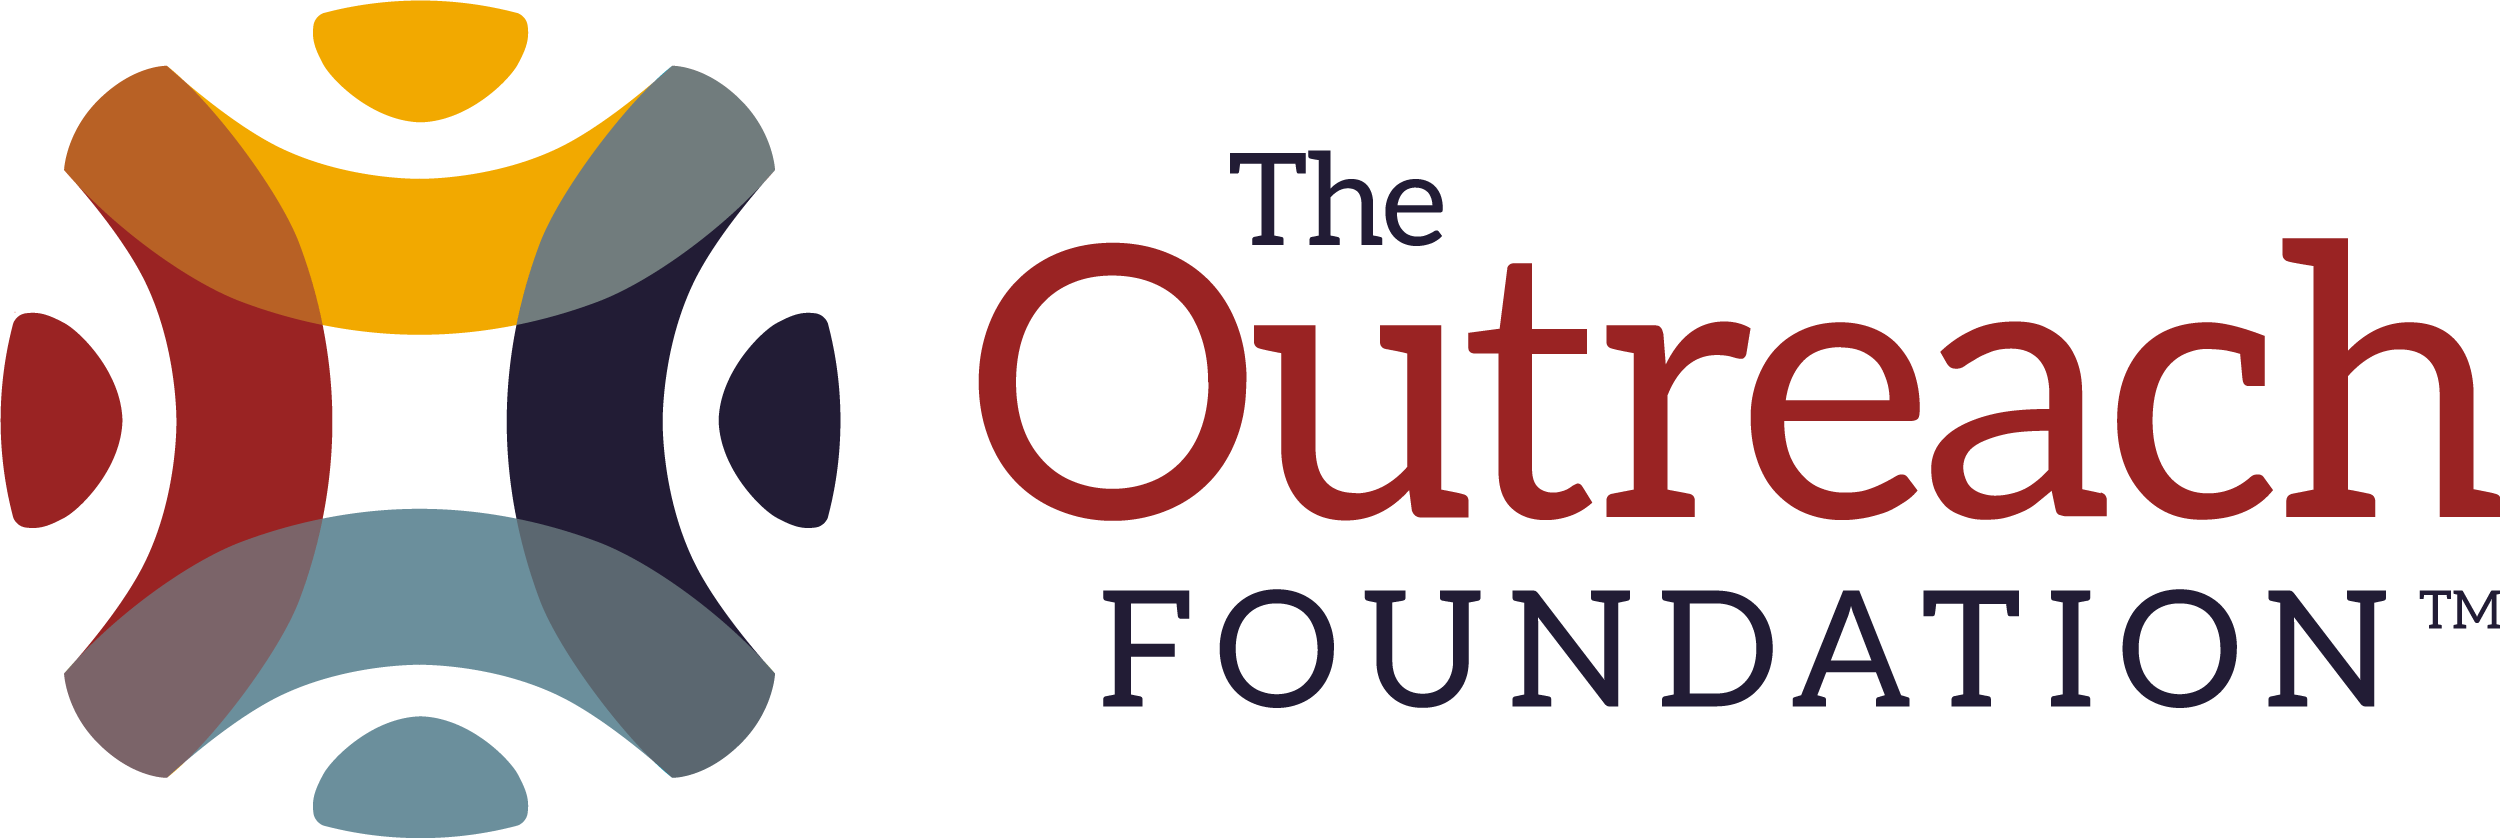 The Outreach Foundation